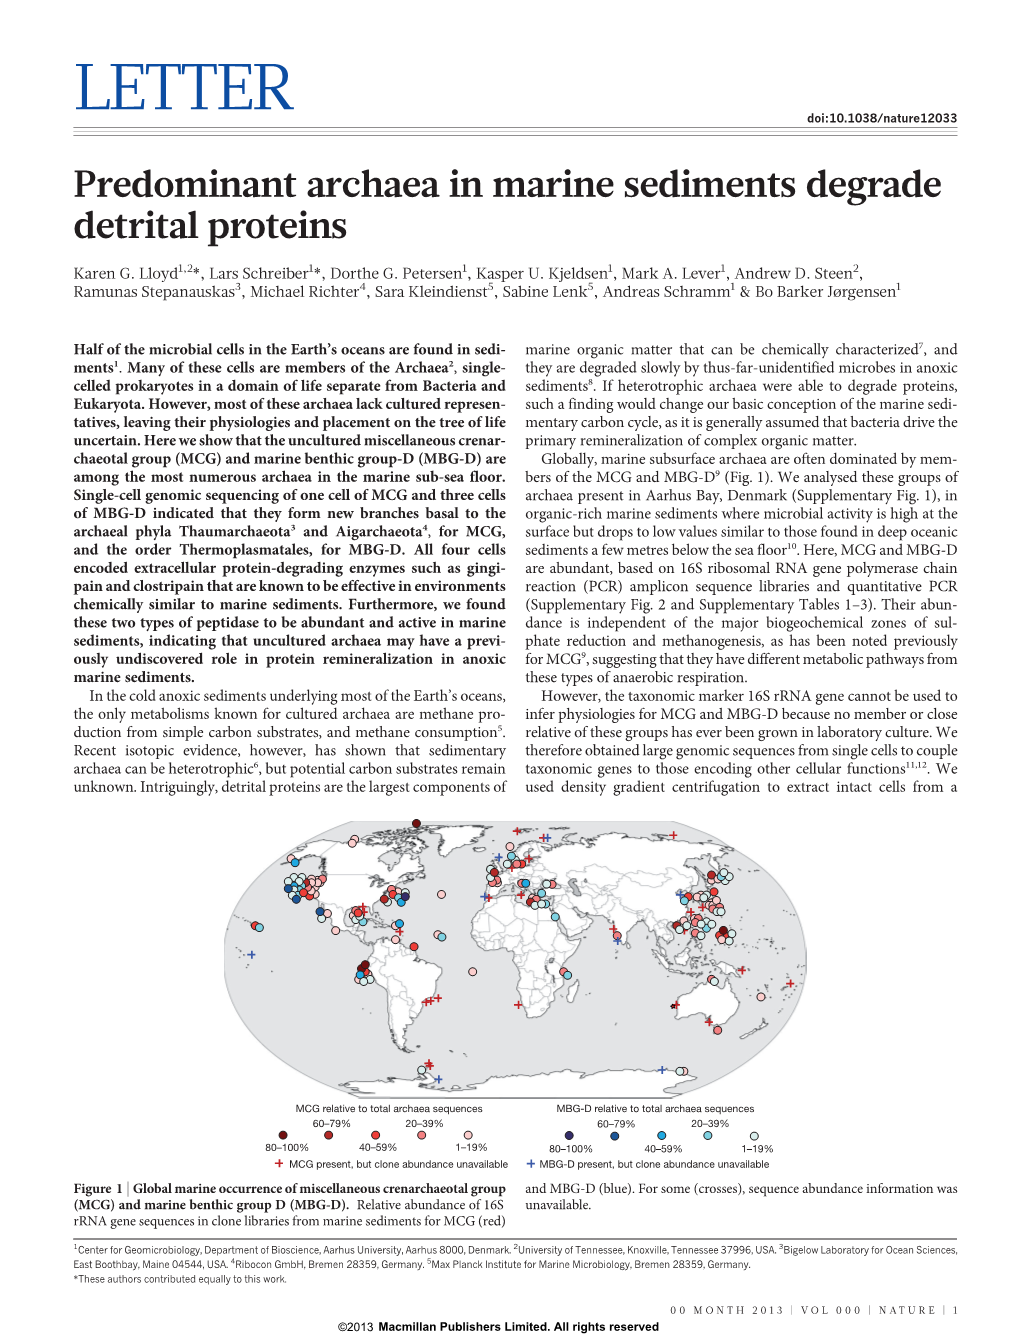 Predominant Archaea in Marine Sediments Degrade Detrital Proteins